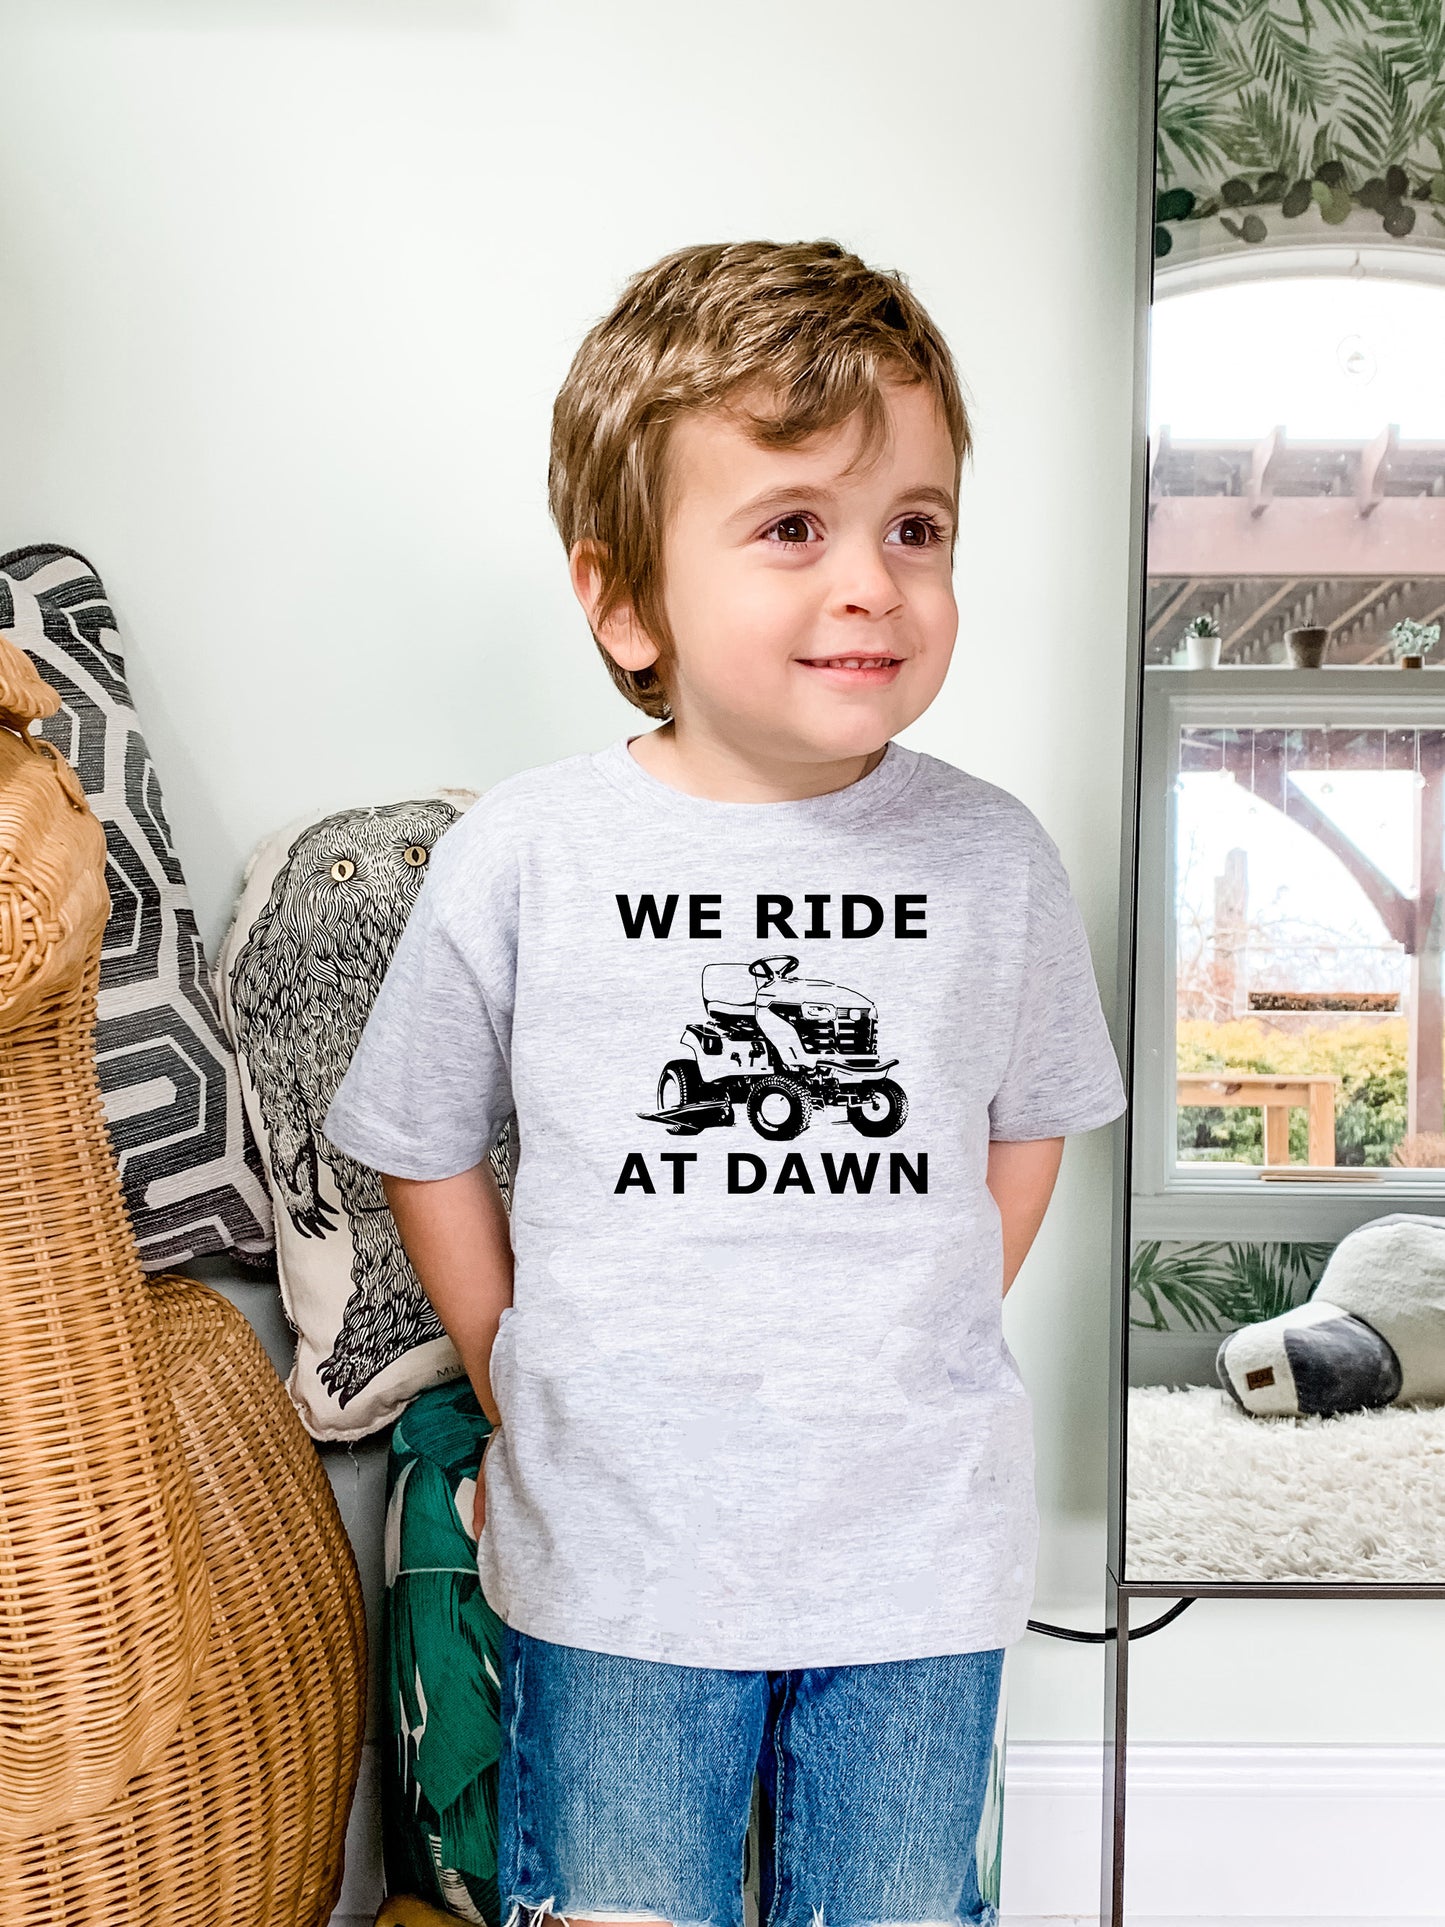 We Ride At Dawn - Toddler Tee - Heather Gray